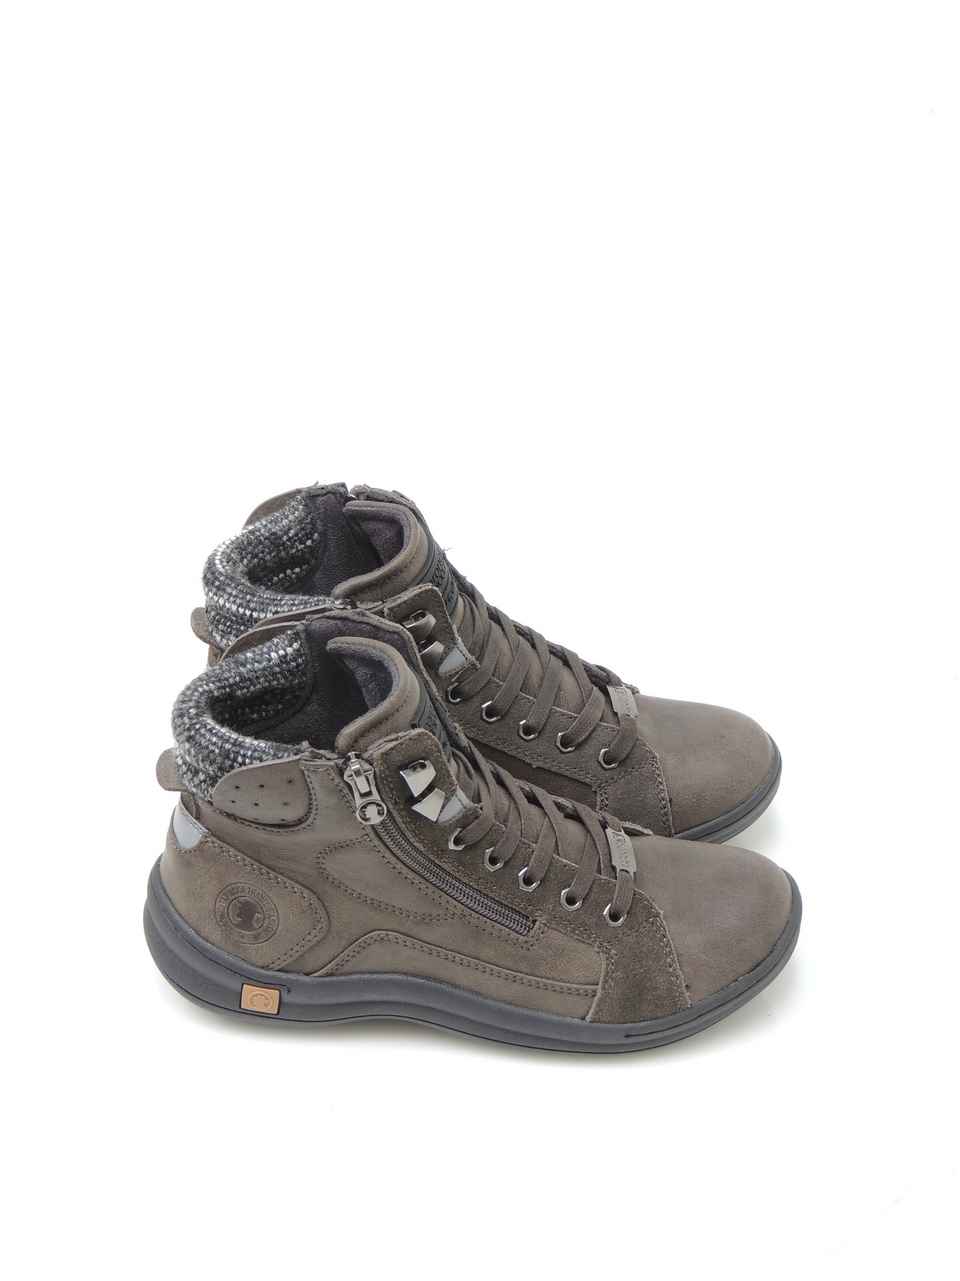 sneakers--coronel tapiocca-c1098-2-polipiel-kaki